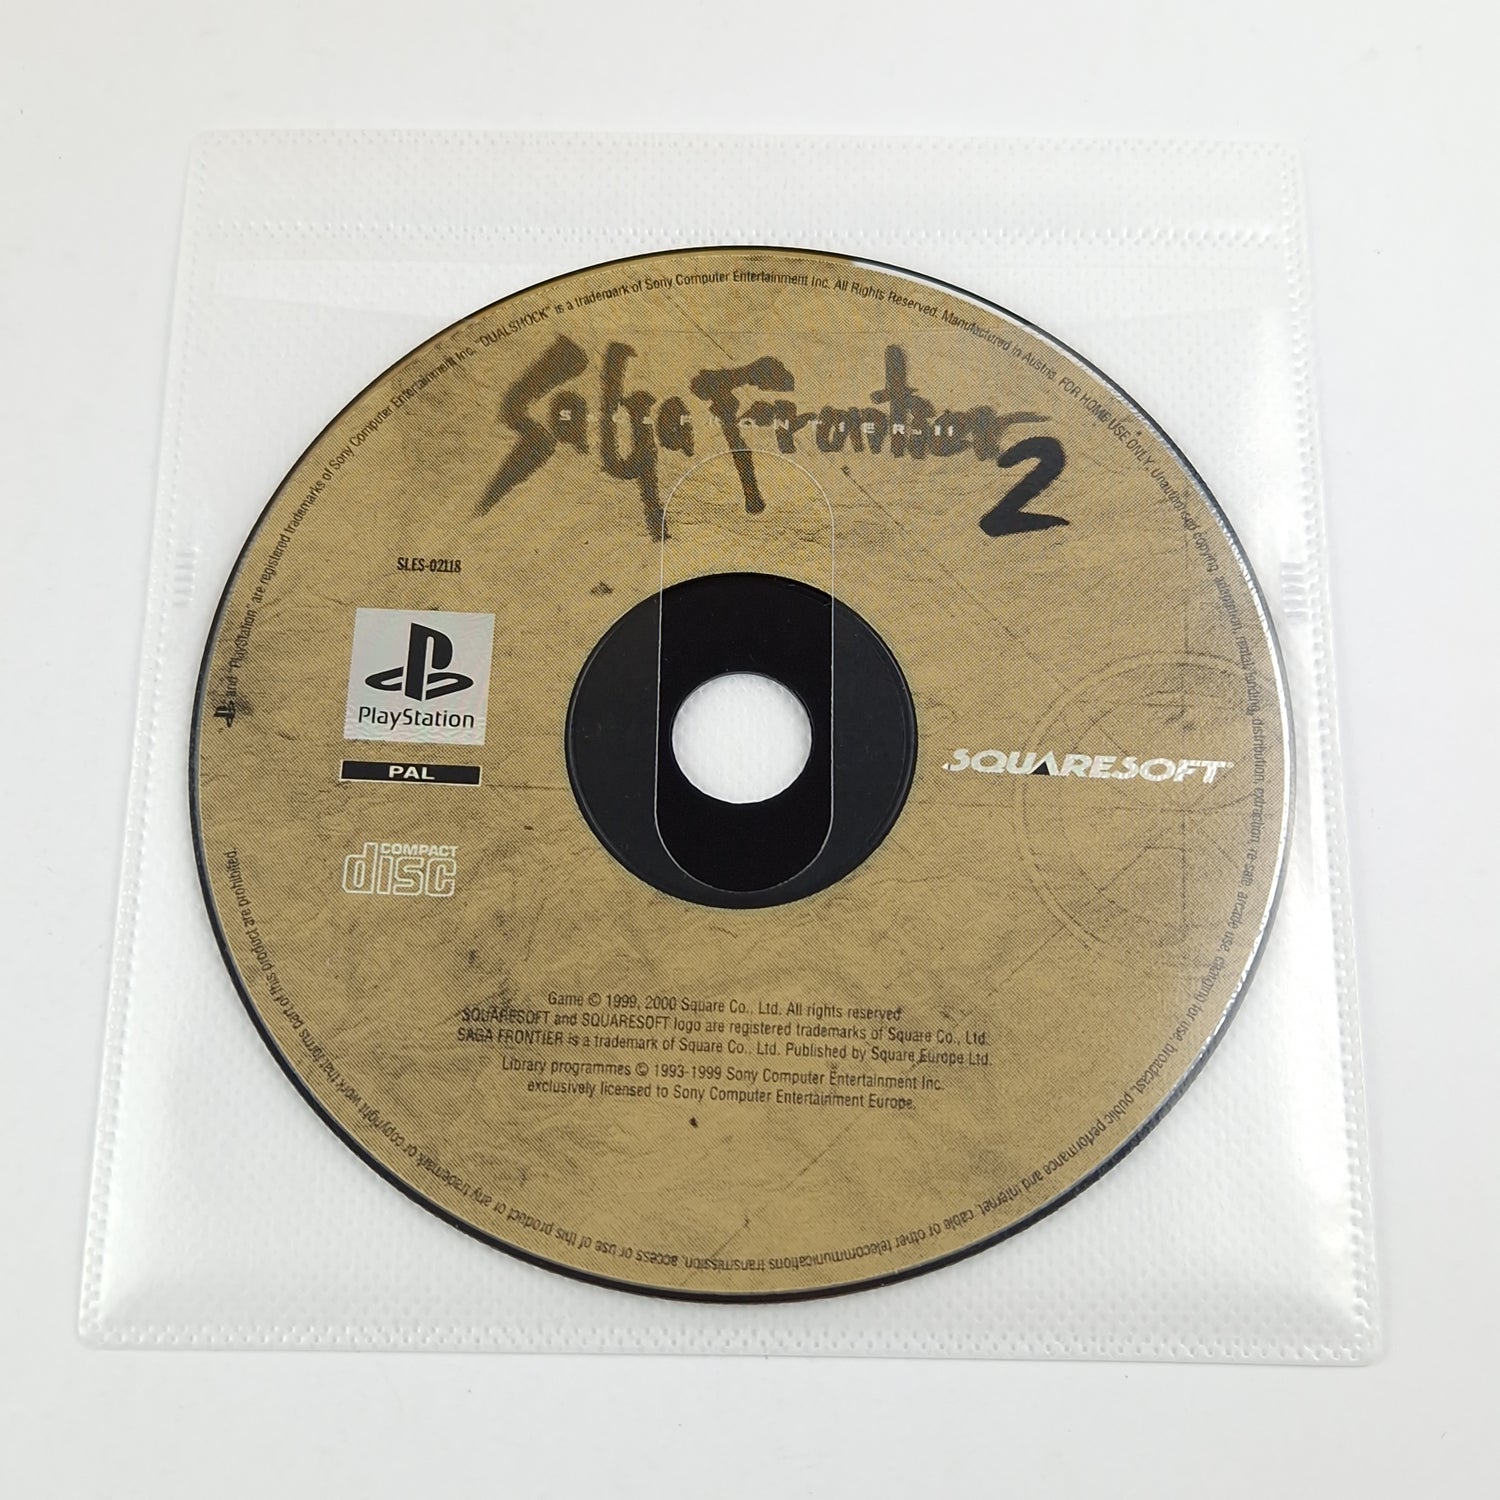 Playstation 1 Spiel : Saga Frontier 2 - CD + Anleitung mit Lösungsbuch Guide PS1